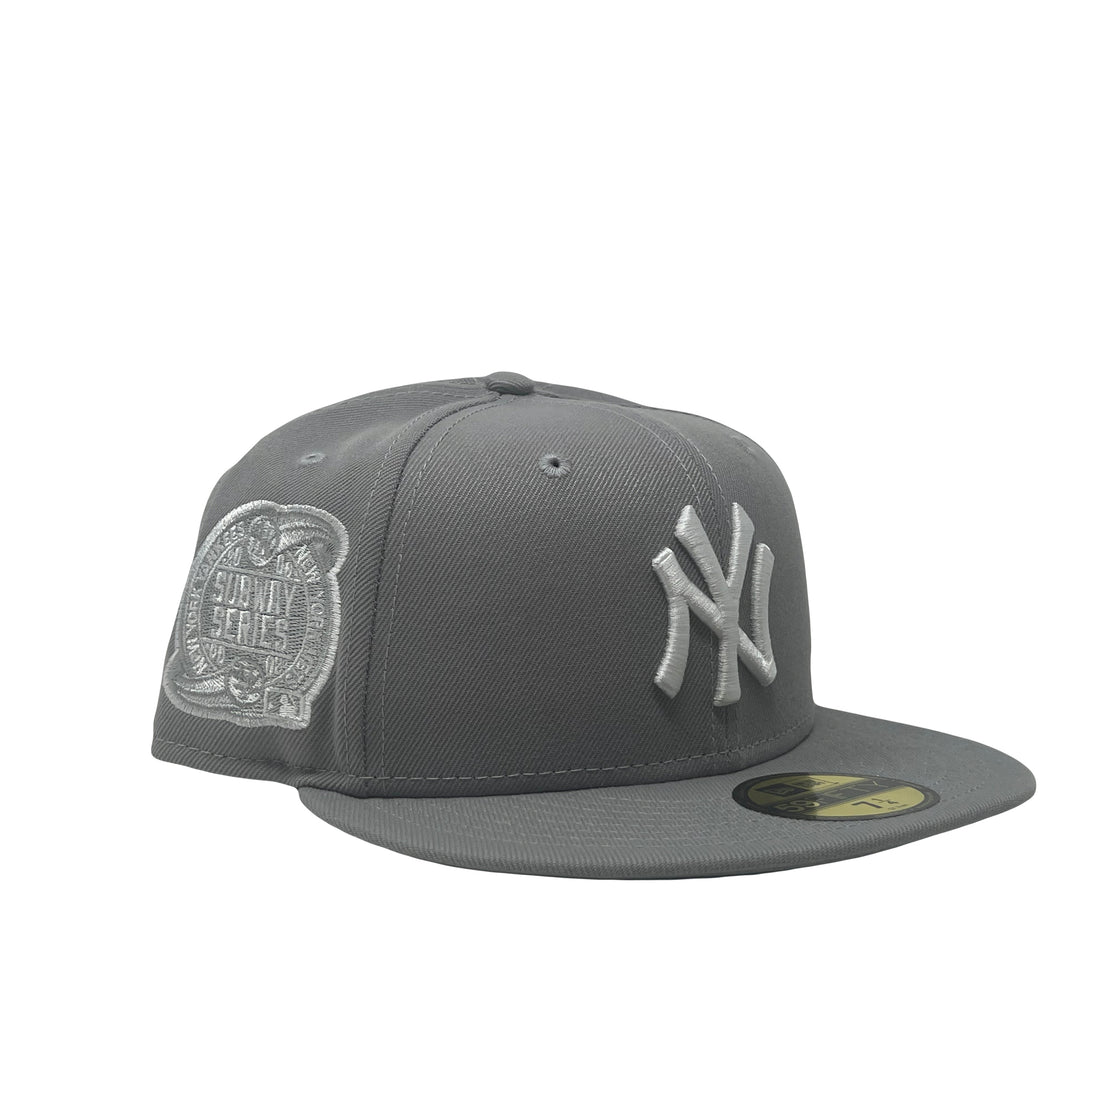 New York Yankees Subway Series Light Gray New Era Fitted Hat